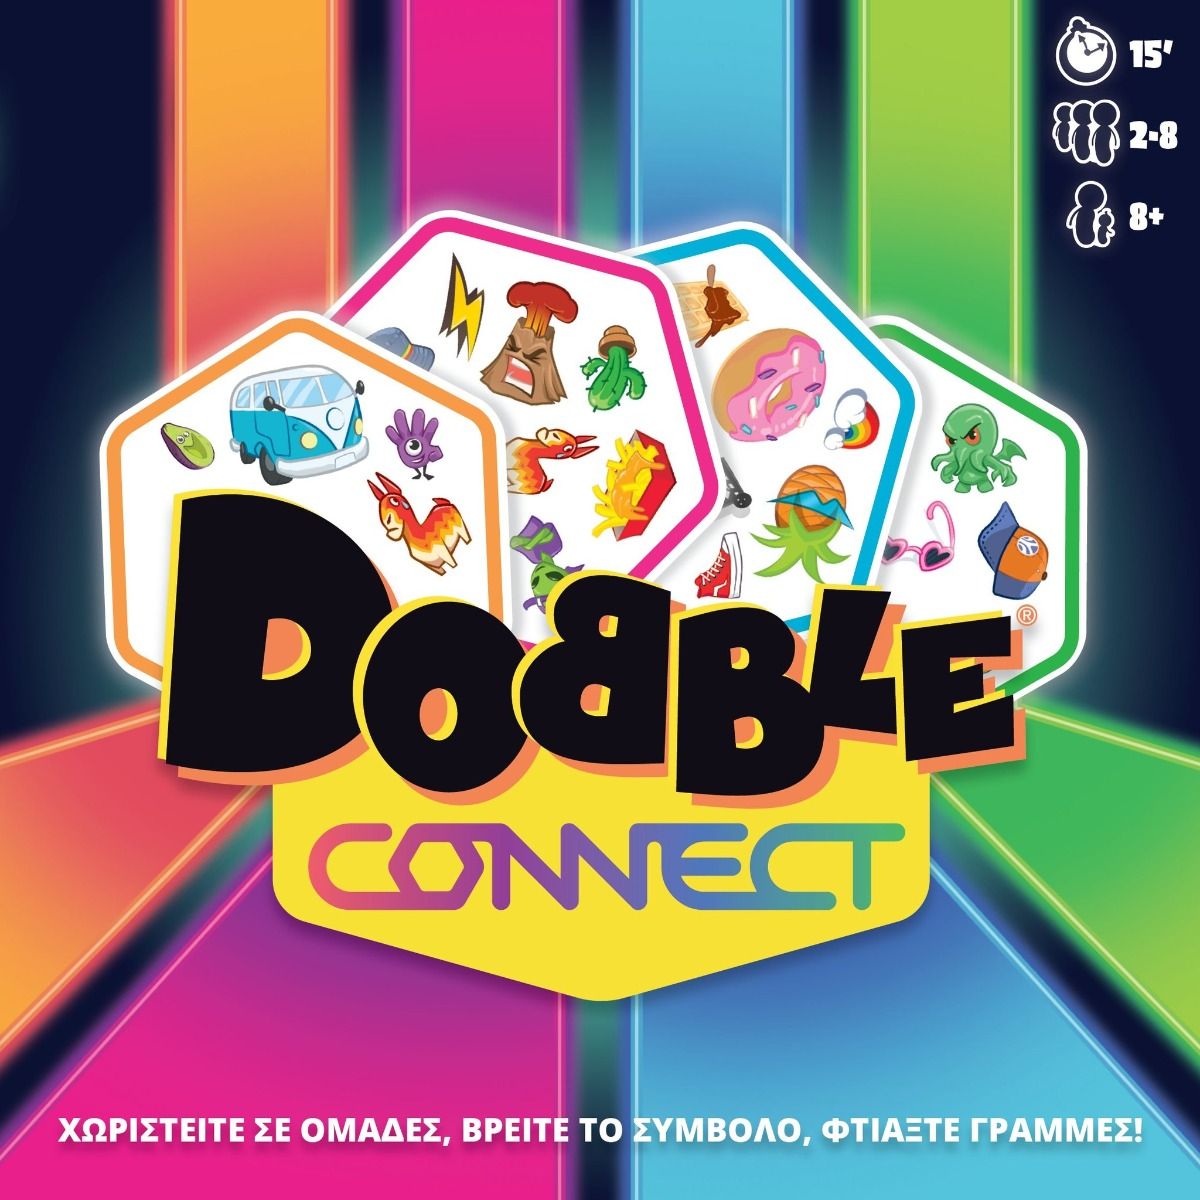 Promo Dobble Connect chez Bi1